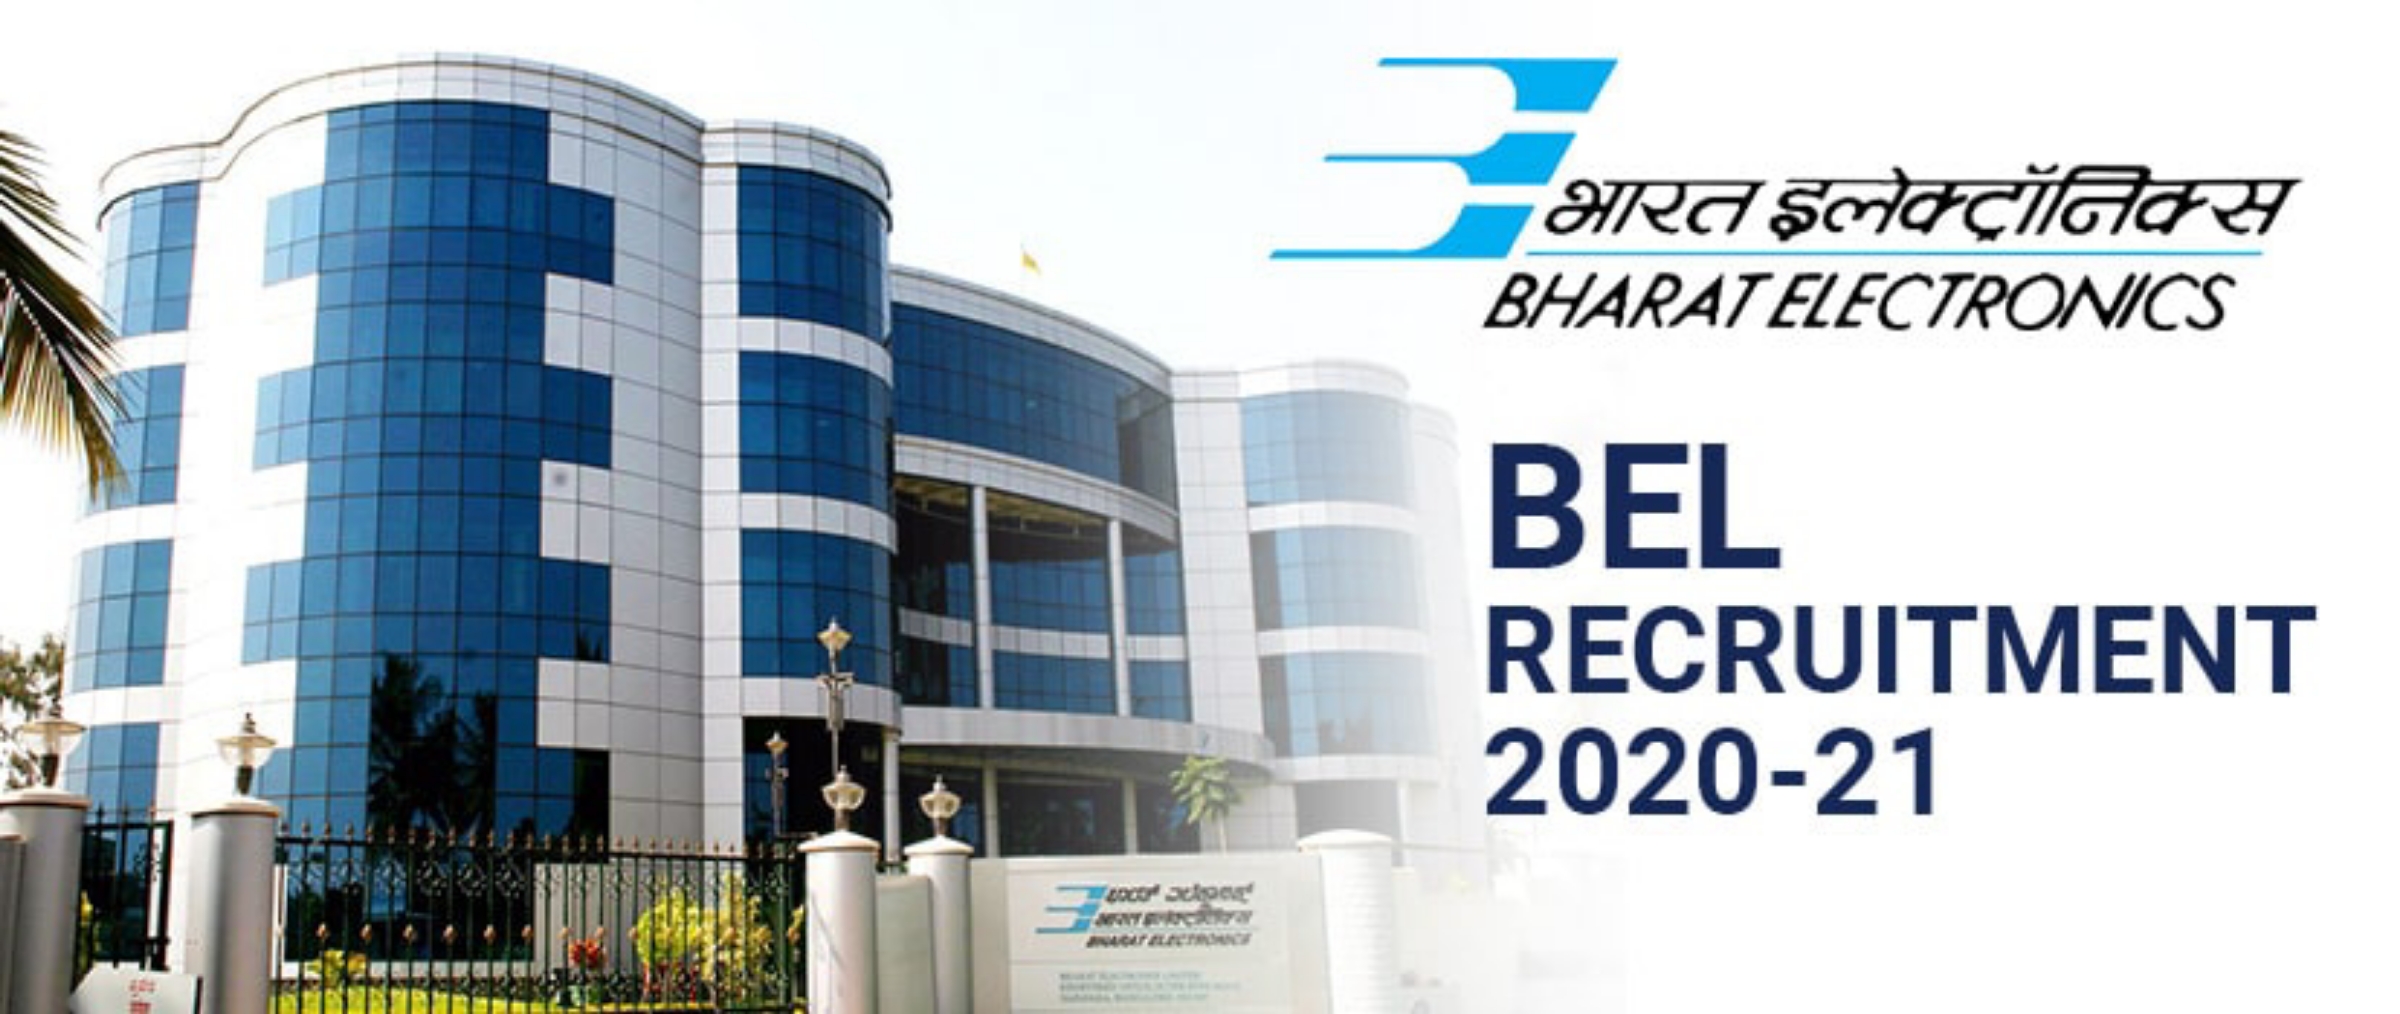 Bharat Electronics is hiring | Trainee Engineer | 40k/m | Apply here!